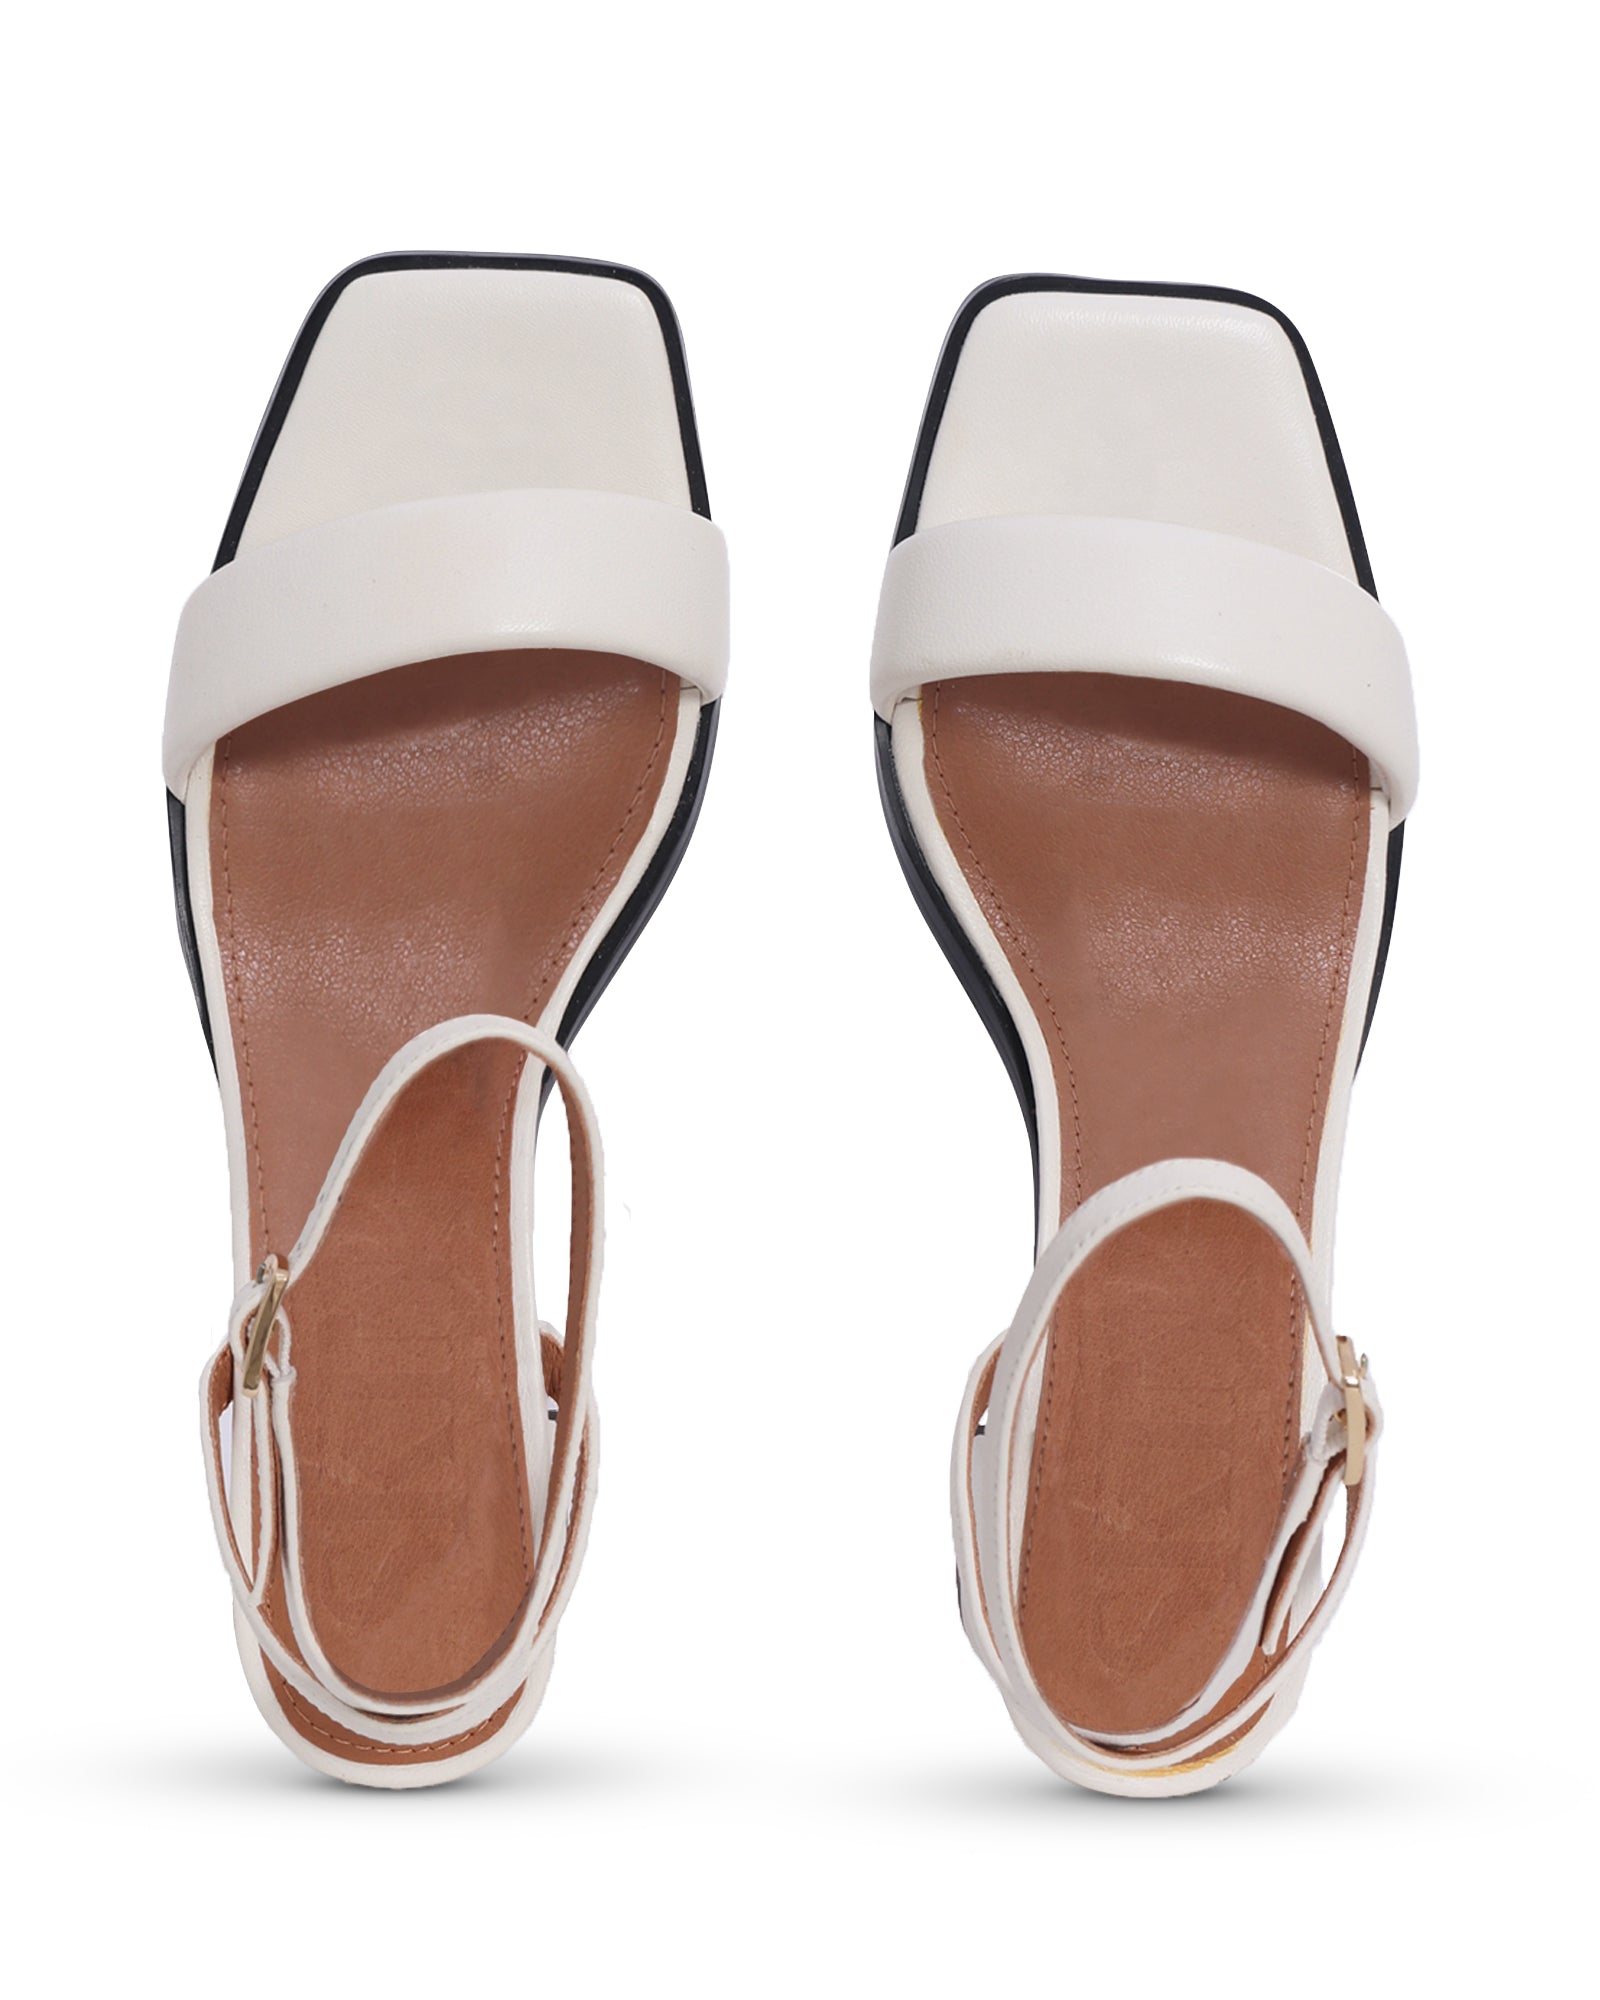 Puglia White 5cm Low Heel